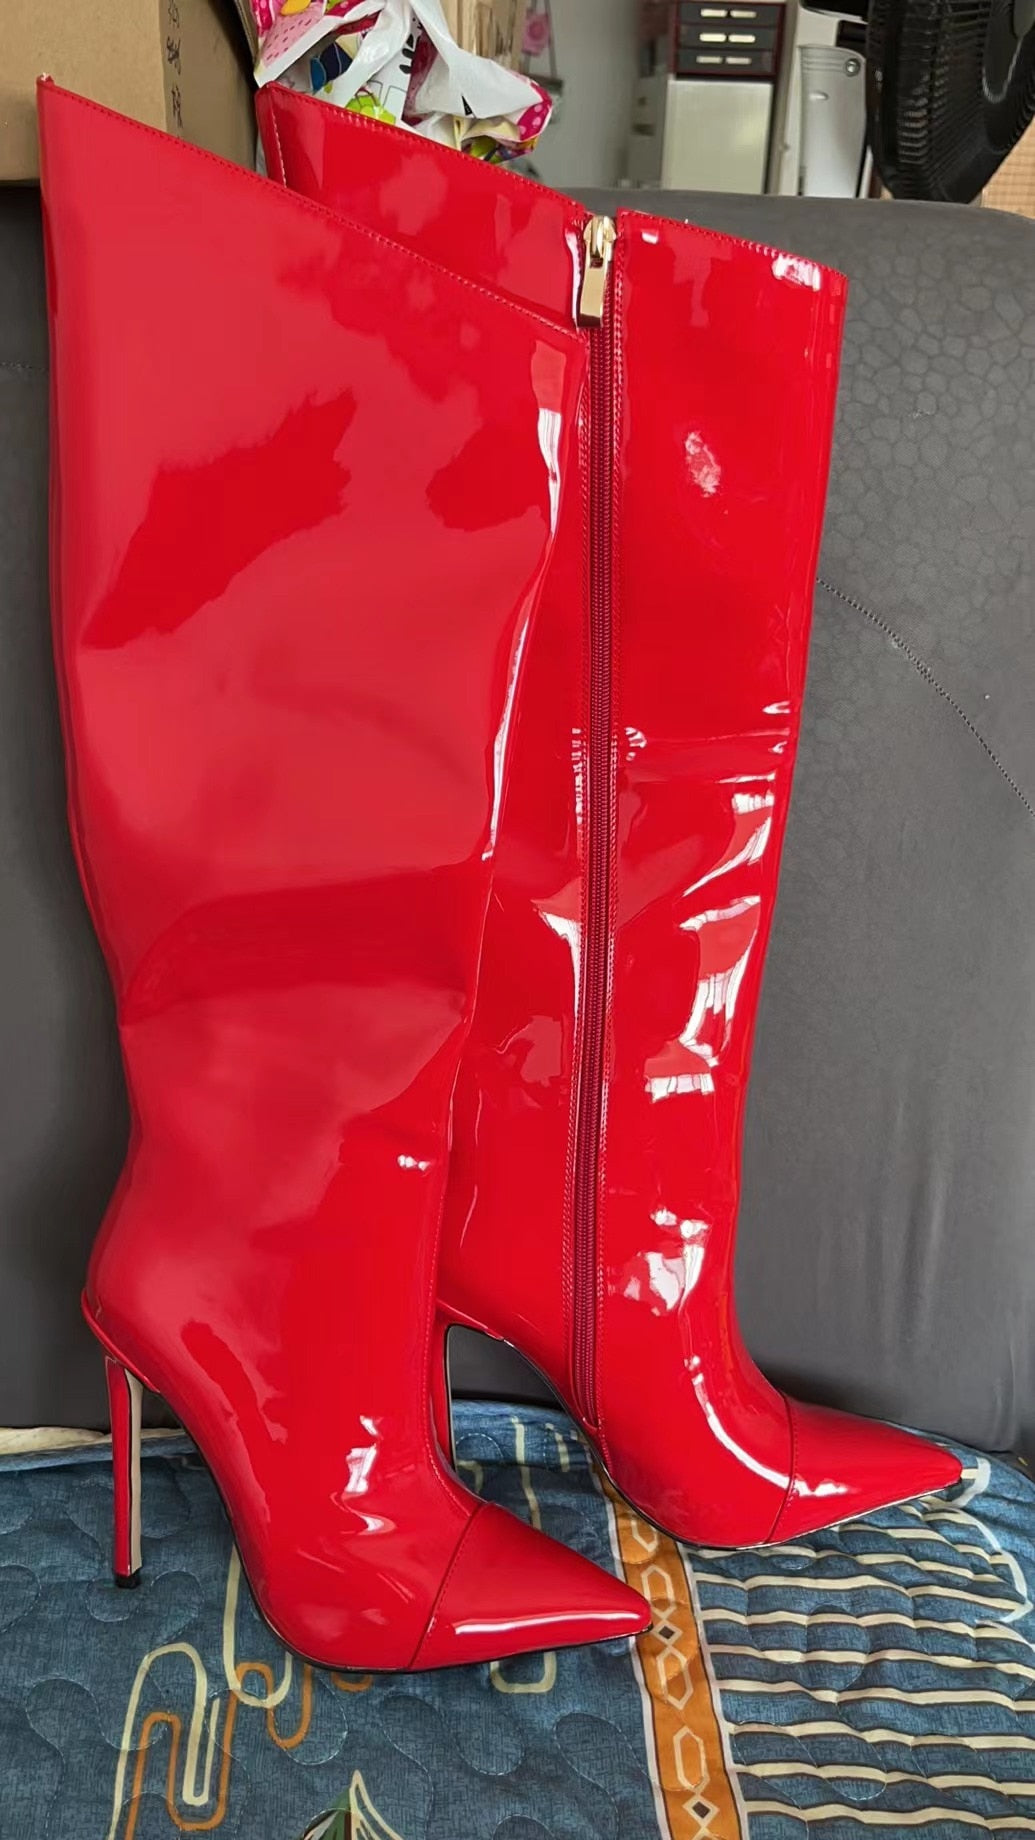 TEEK - Mirror High Boots SHOES theteekdotcom red 8.5 